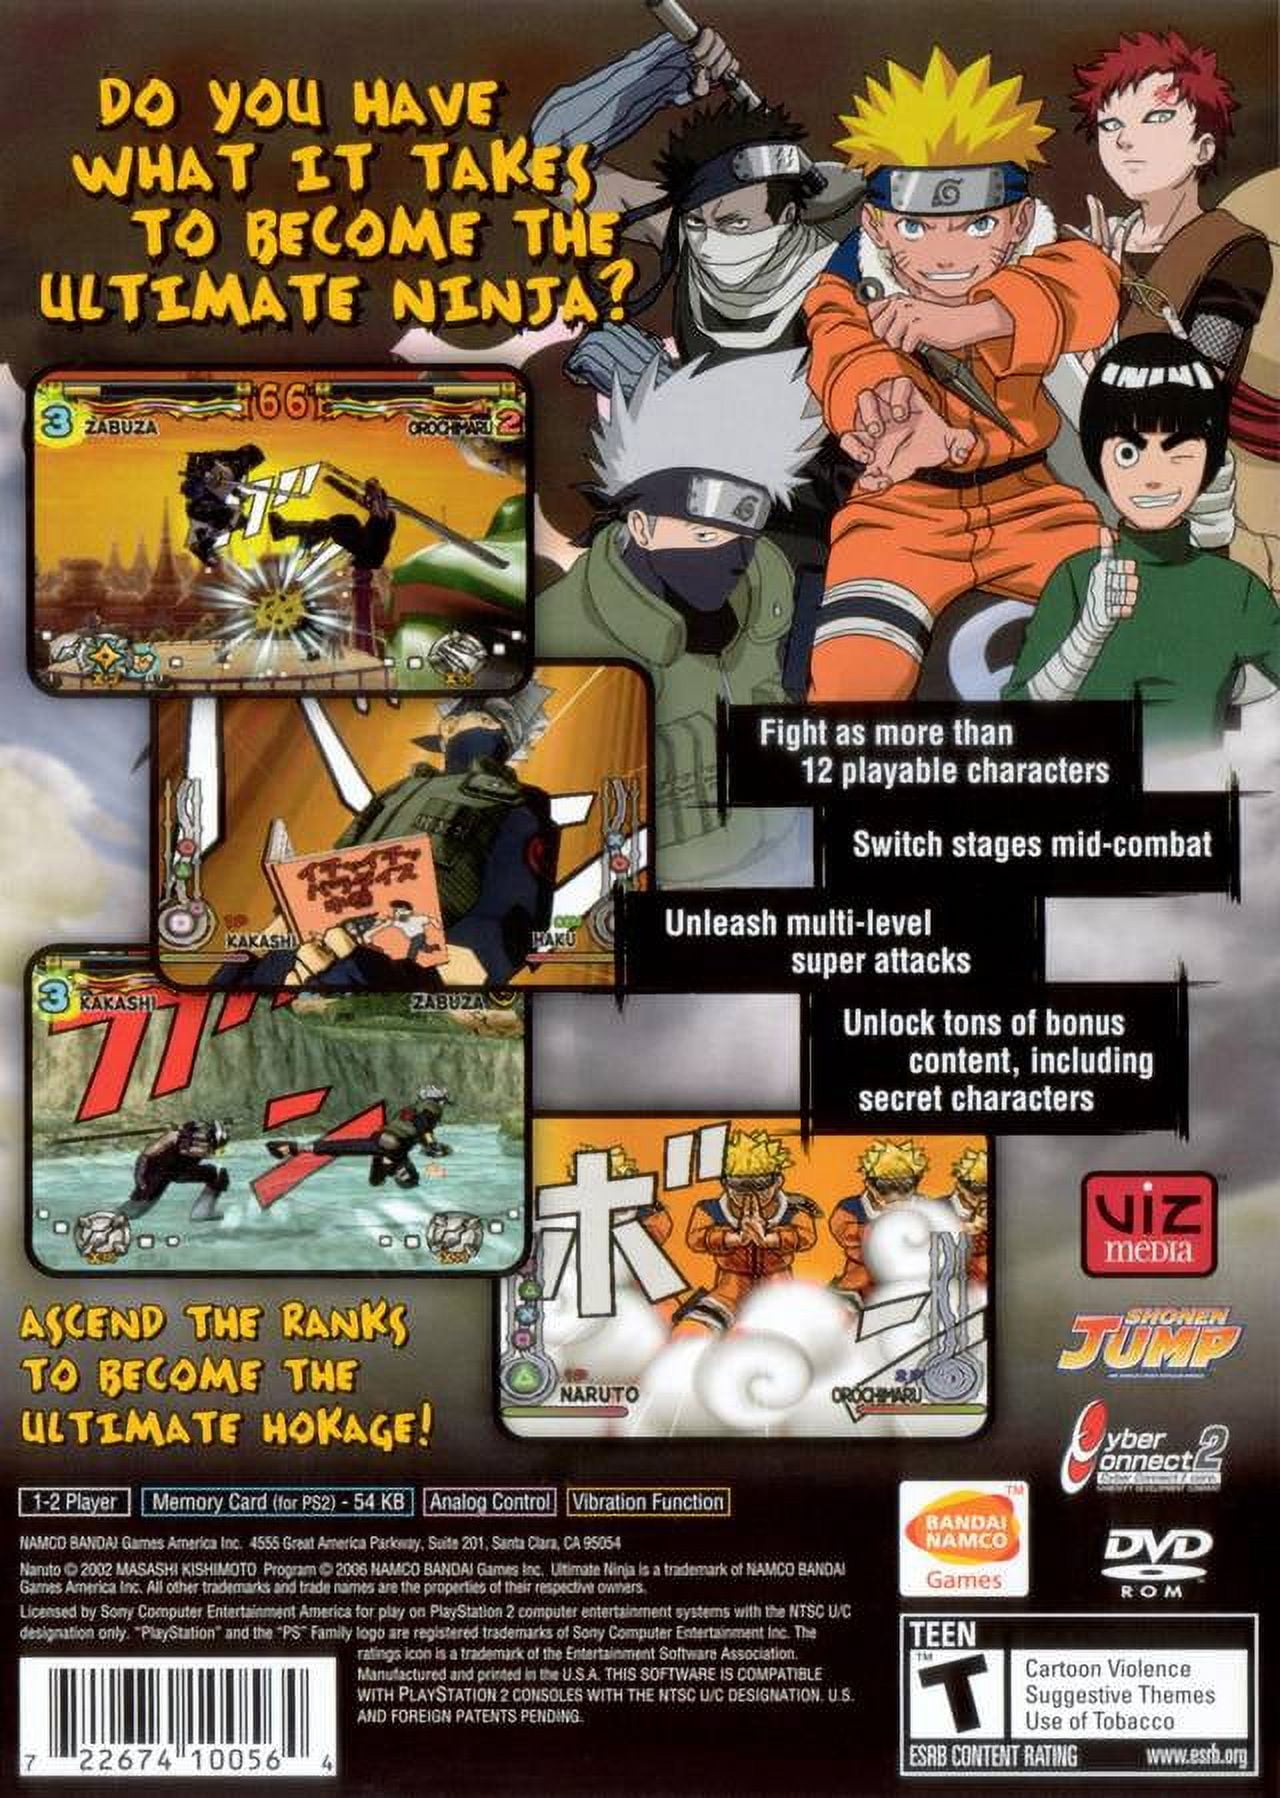 Naruto Ultimate Ninja 3 Cheats Playstation 2 - Colaboratory